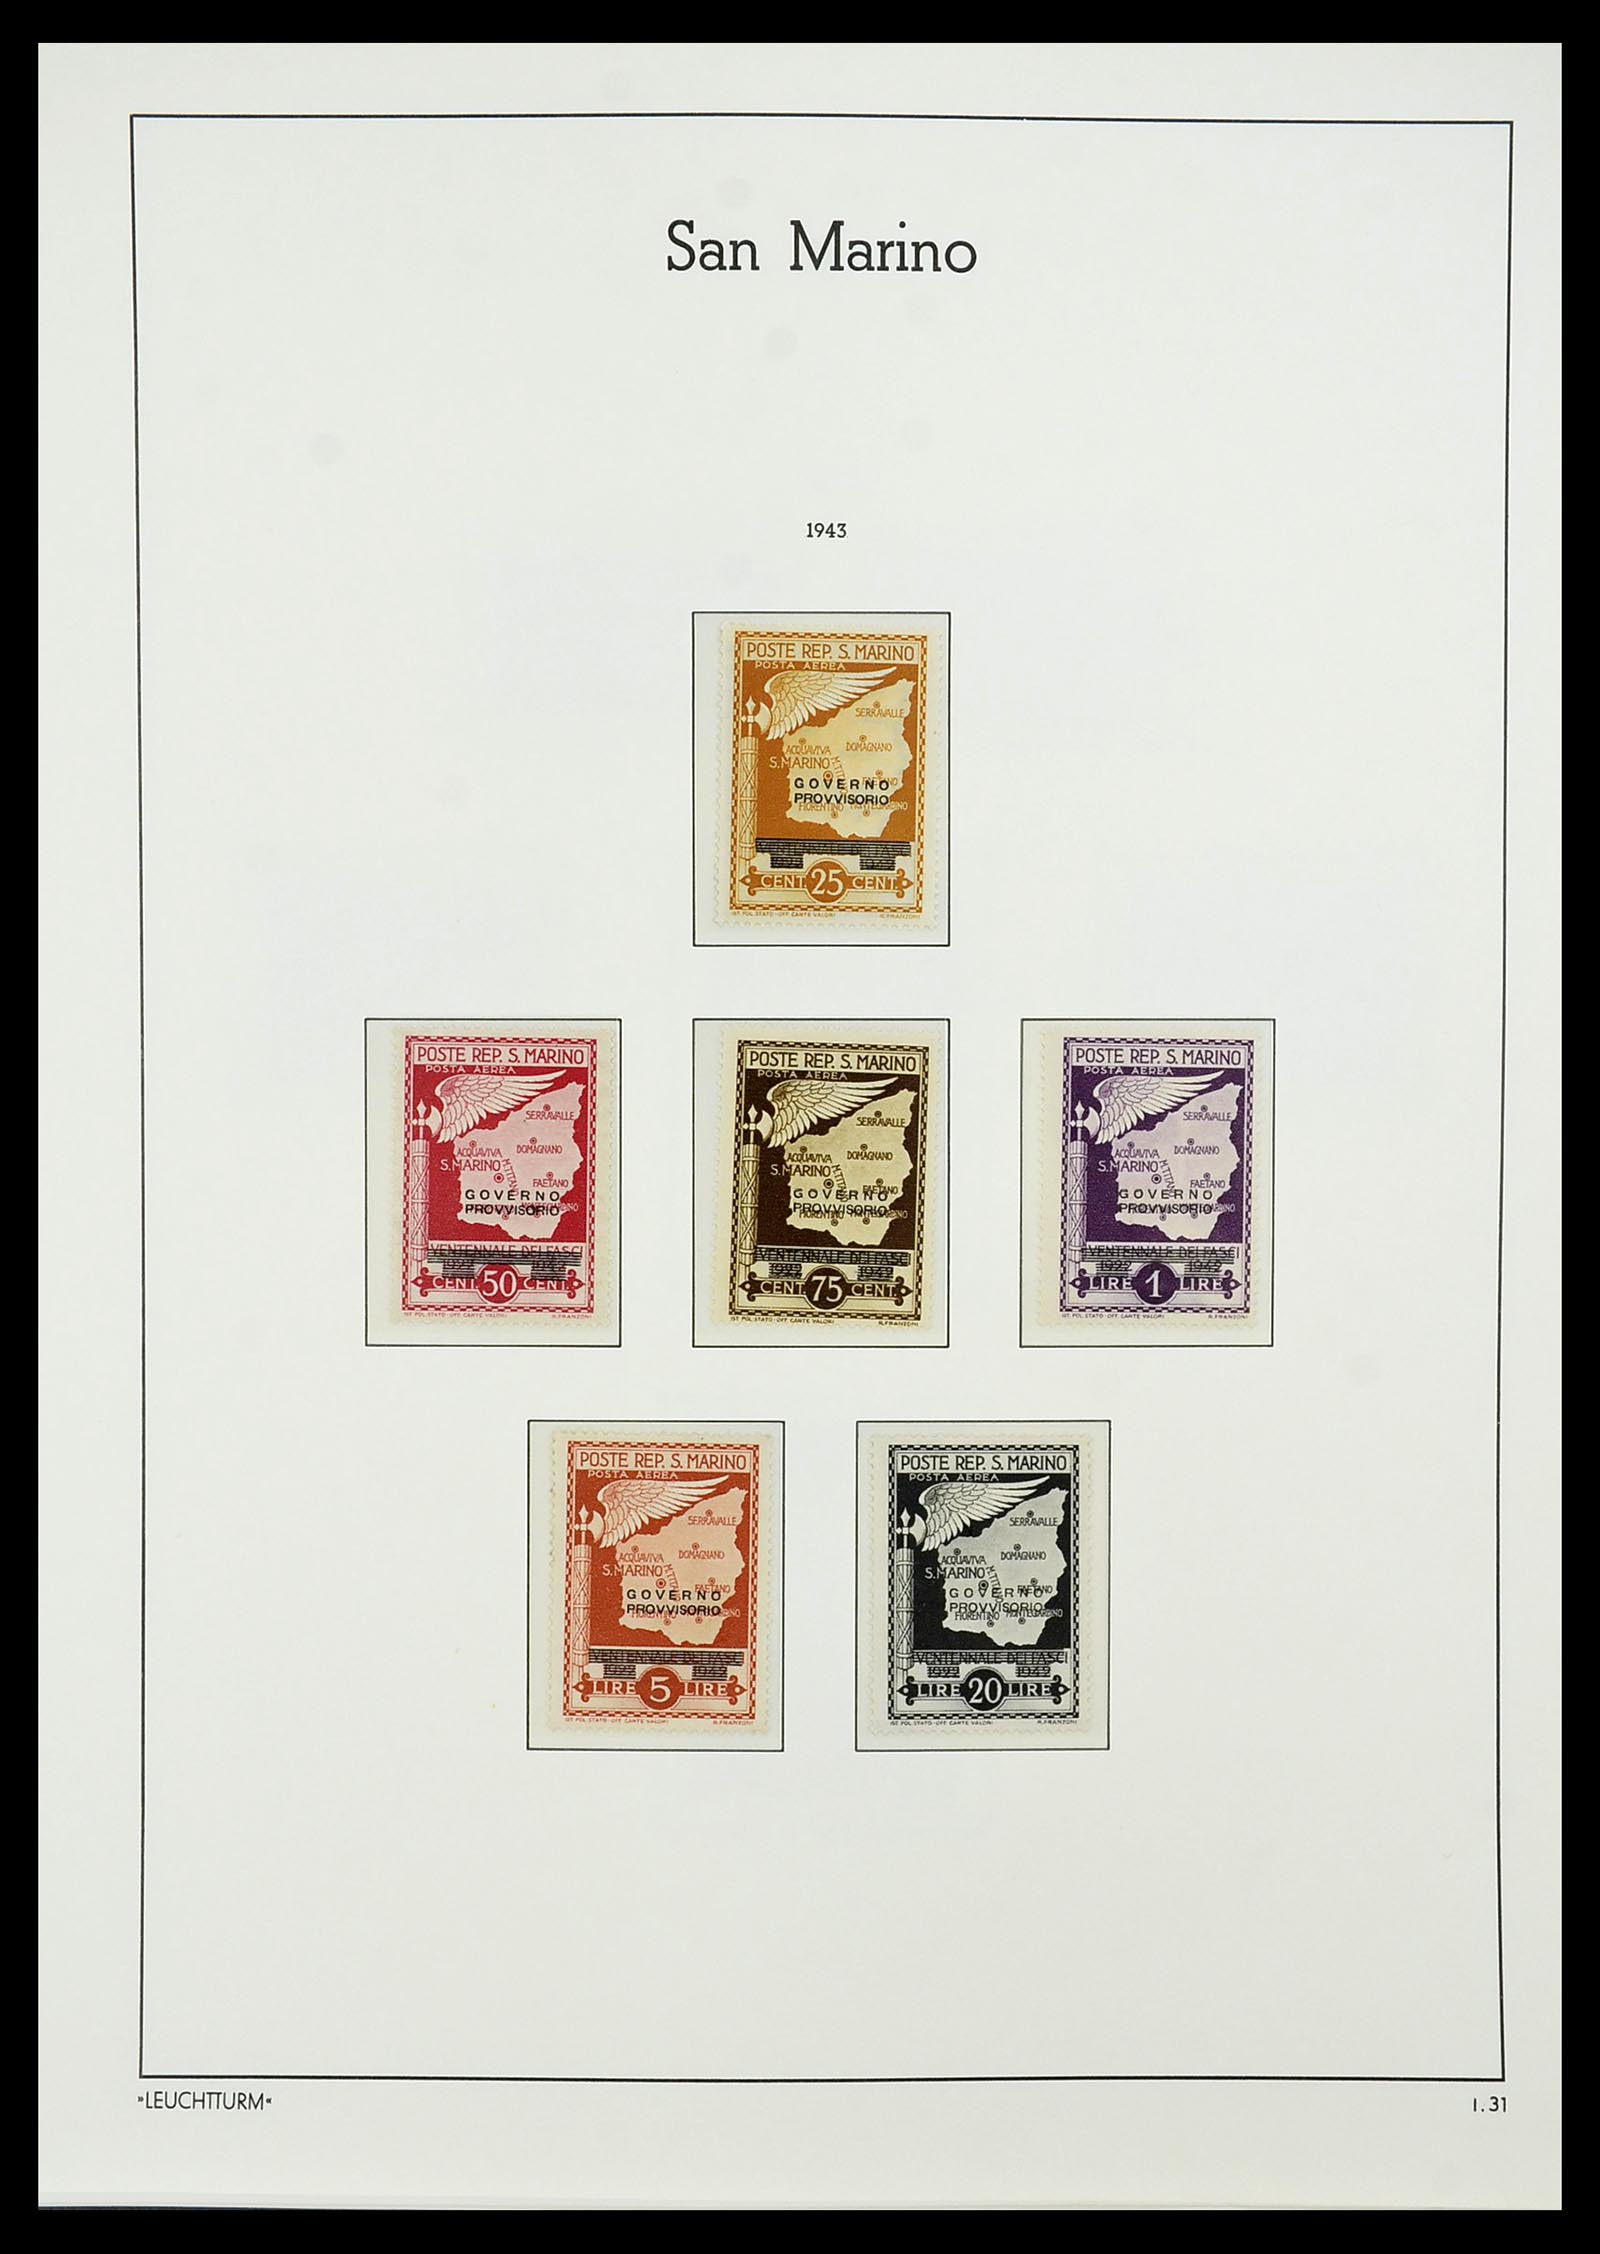 34243 033 - Stamp collection 34243 San Marino 1877-2008.